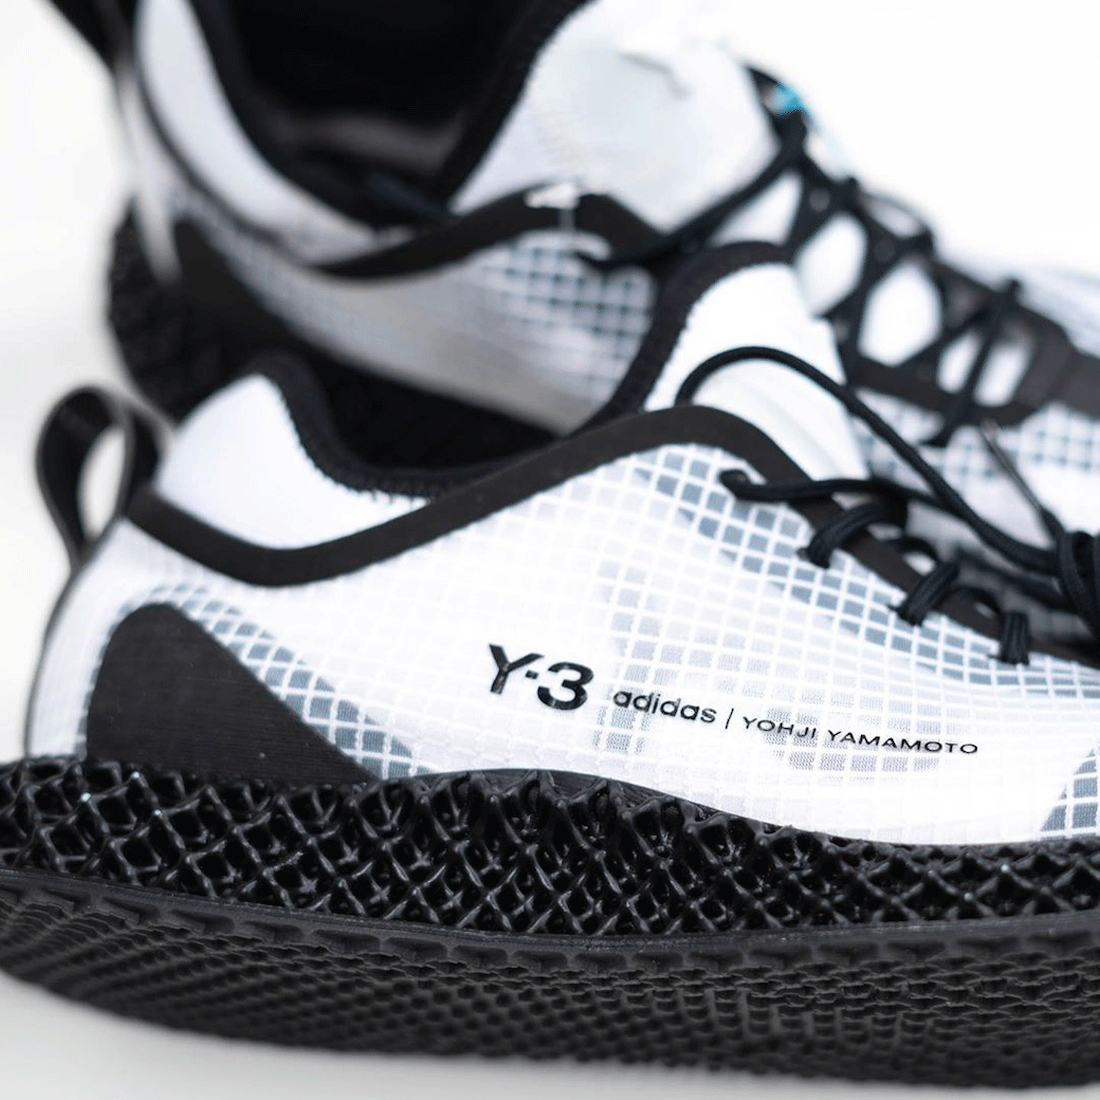 adidas Y-3 Runner 4D IO Sample 2020 Release Date